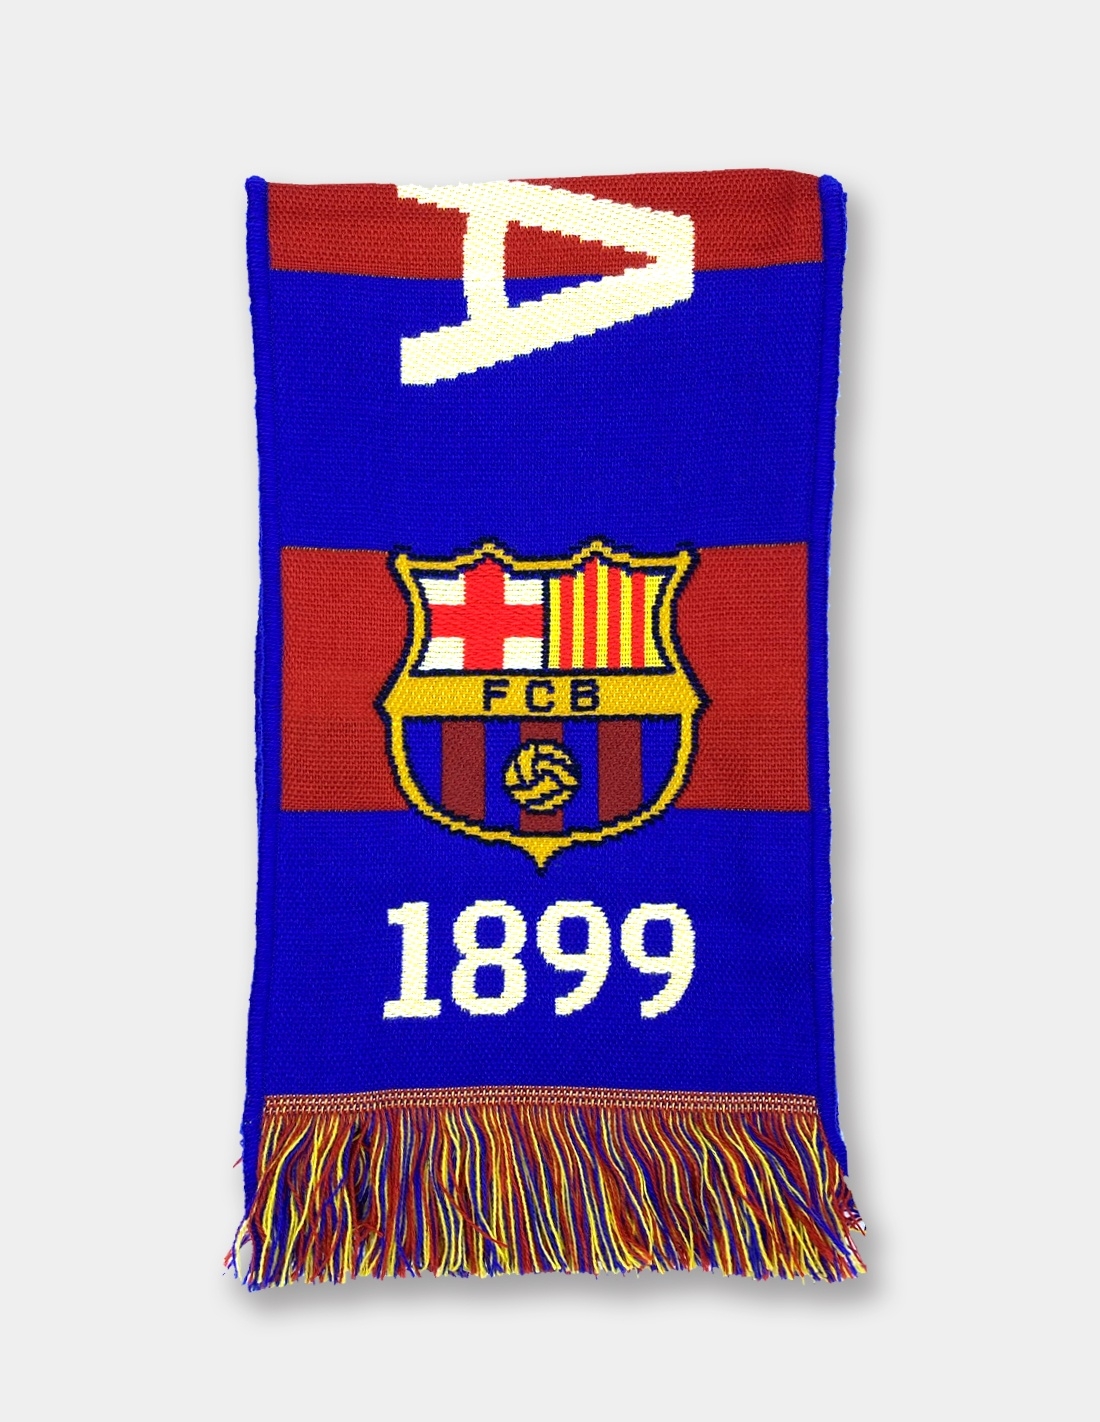 945 Sofisticado pedestal Bufanda FC Barcelona "1899" Color Blaugrana